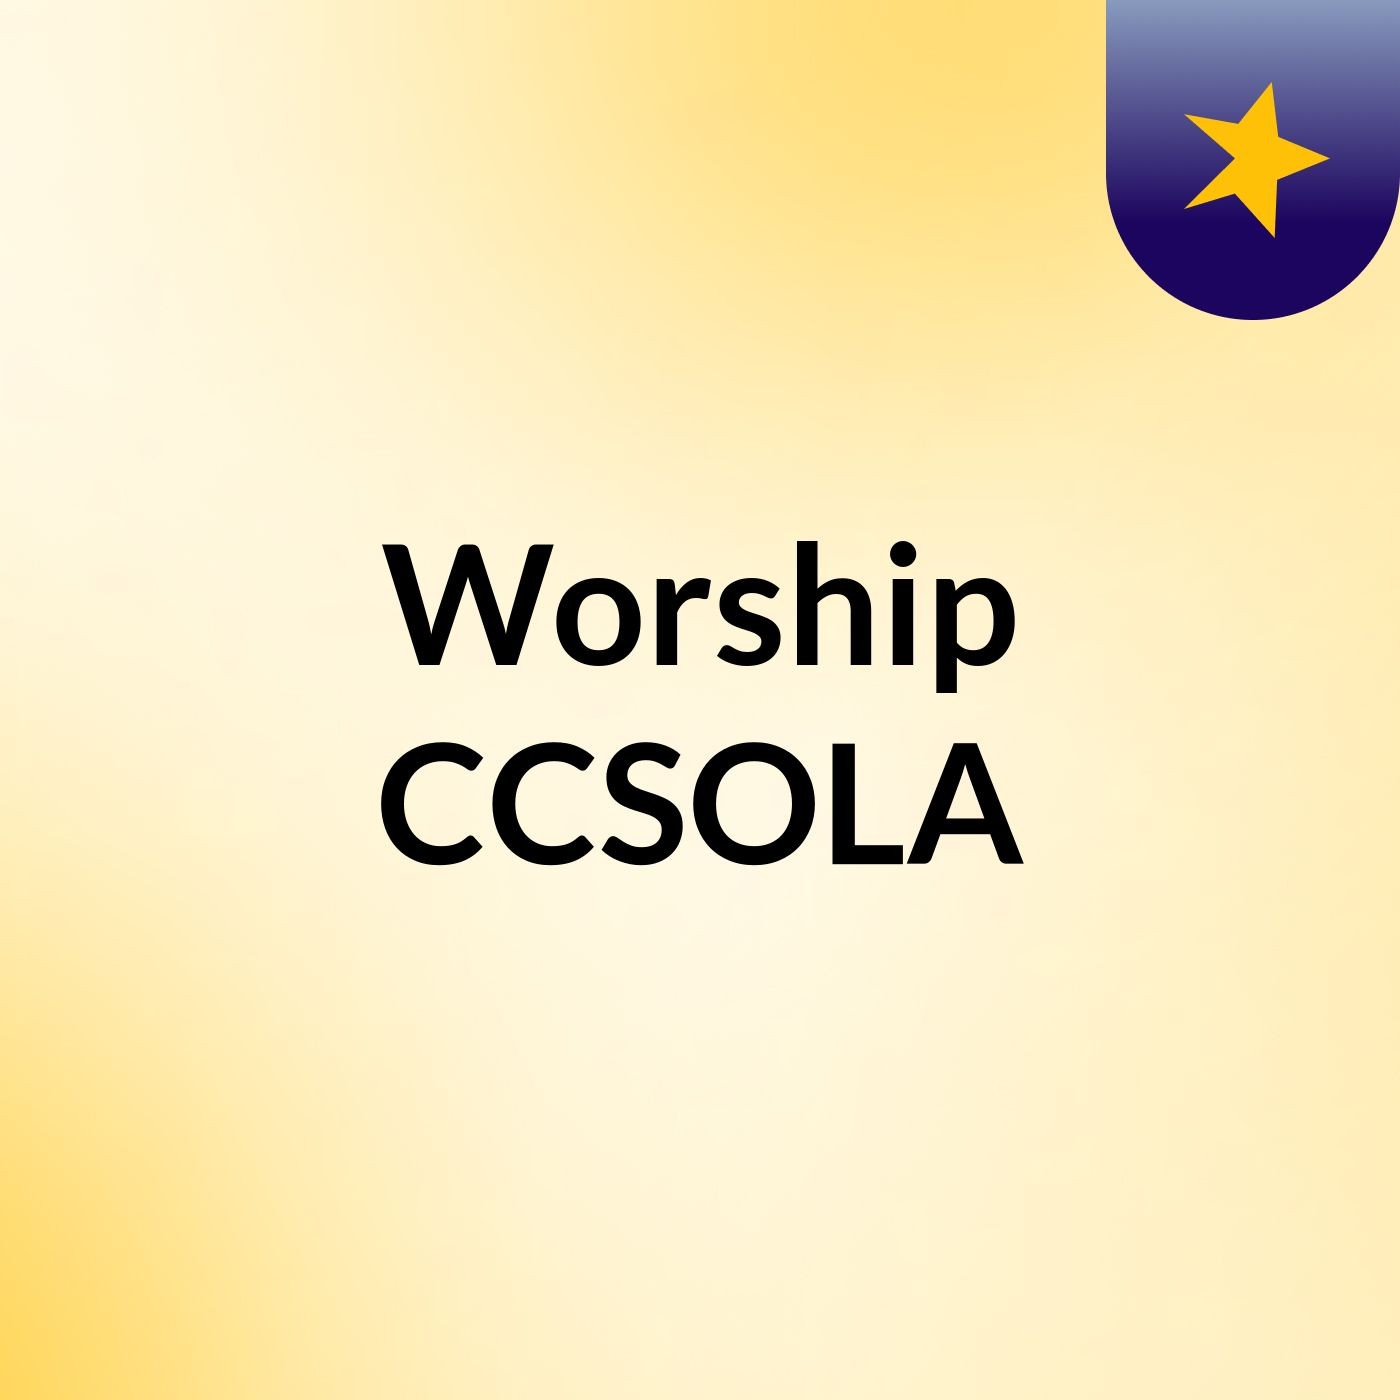 Worship CCSOLA